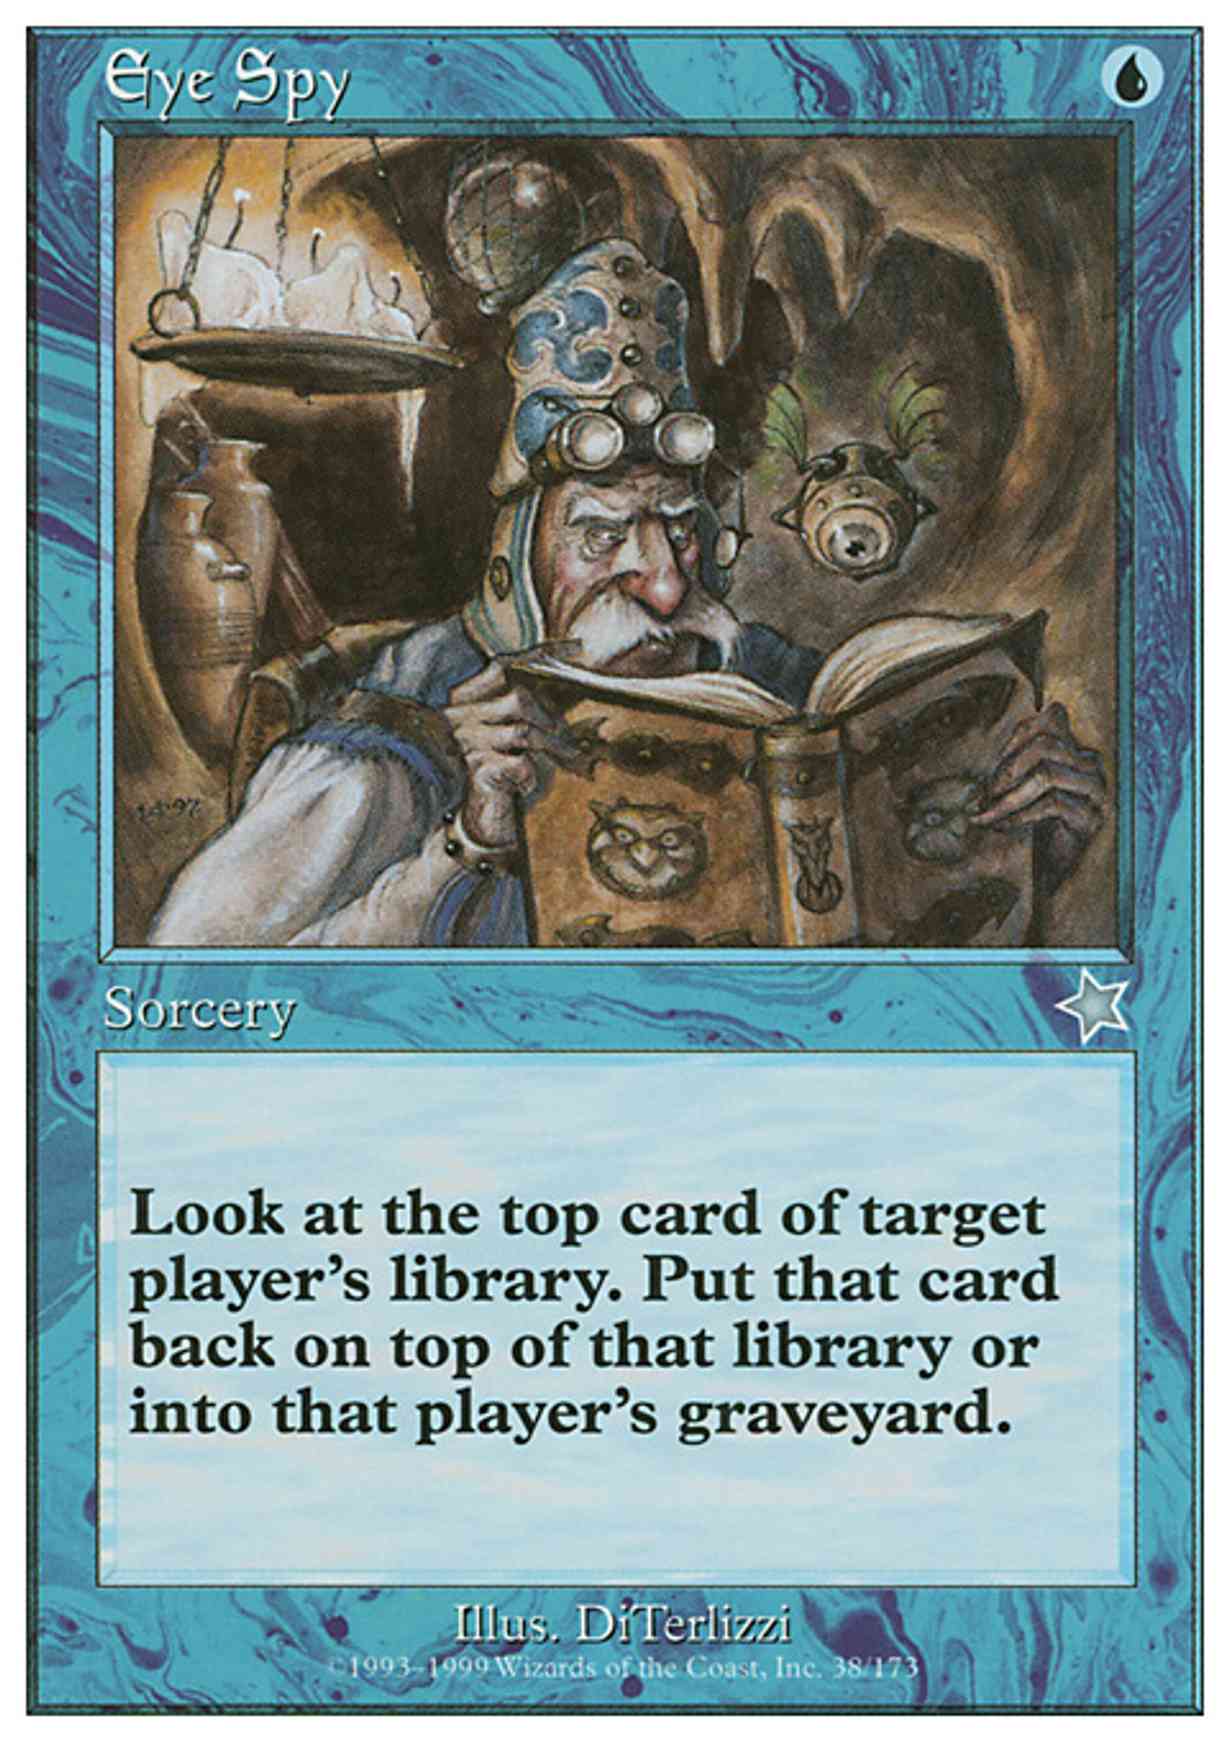 Eye Spy magic card front